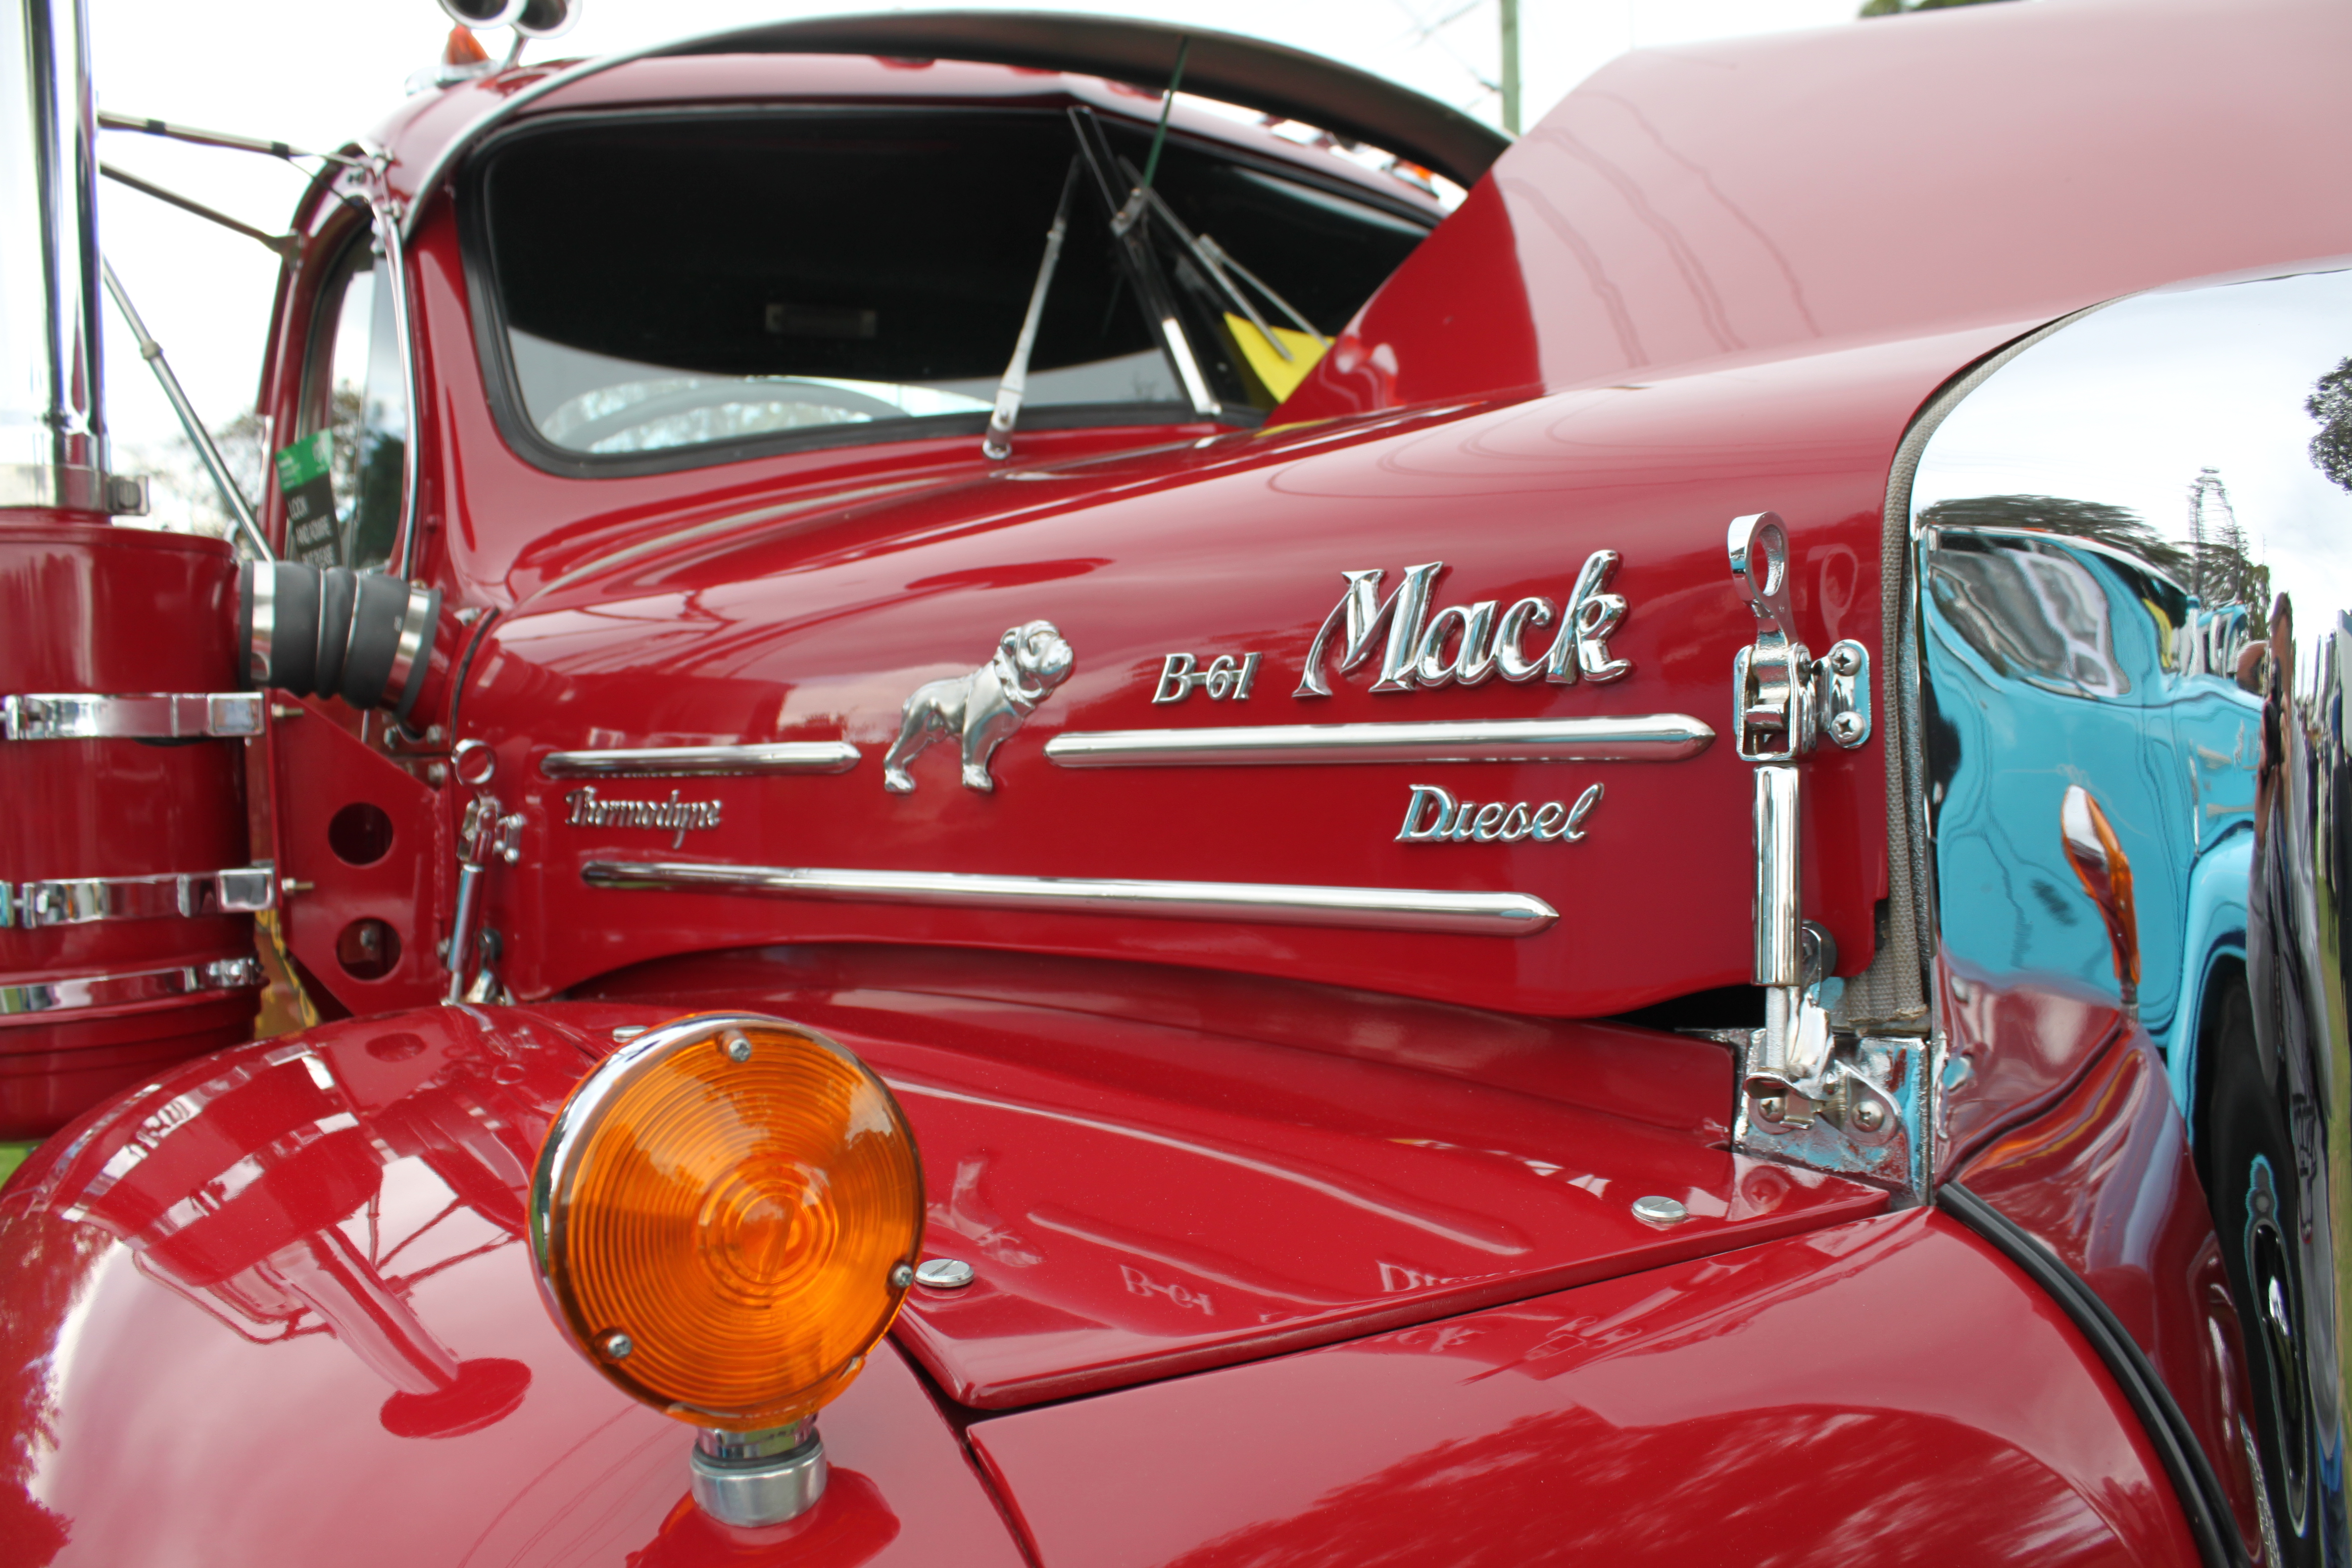 Mack B61 Backgrounds, Compatible - PC, Mobile, Gadgets| 4752x3168 px